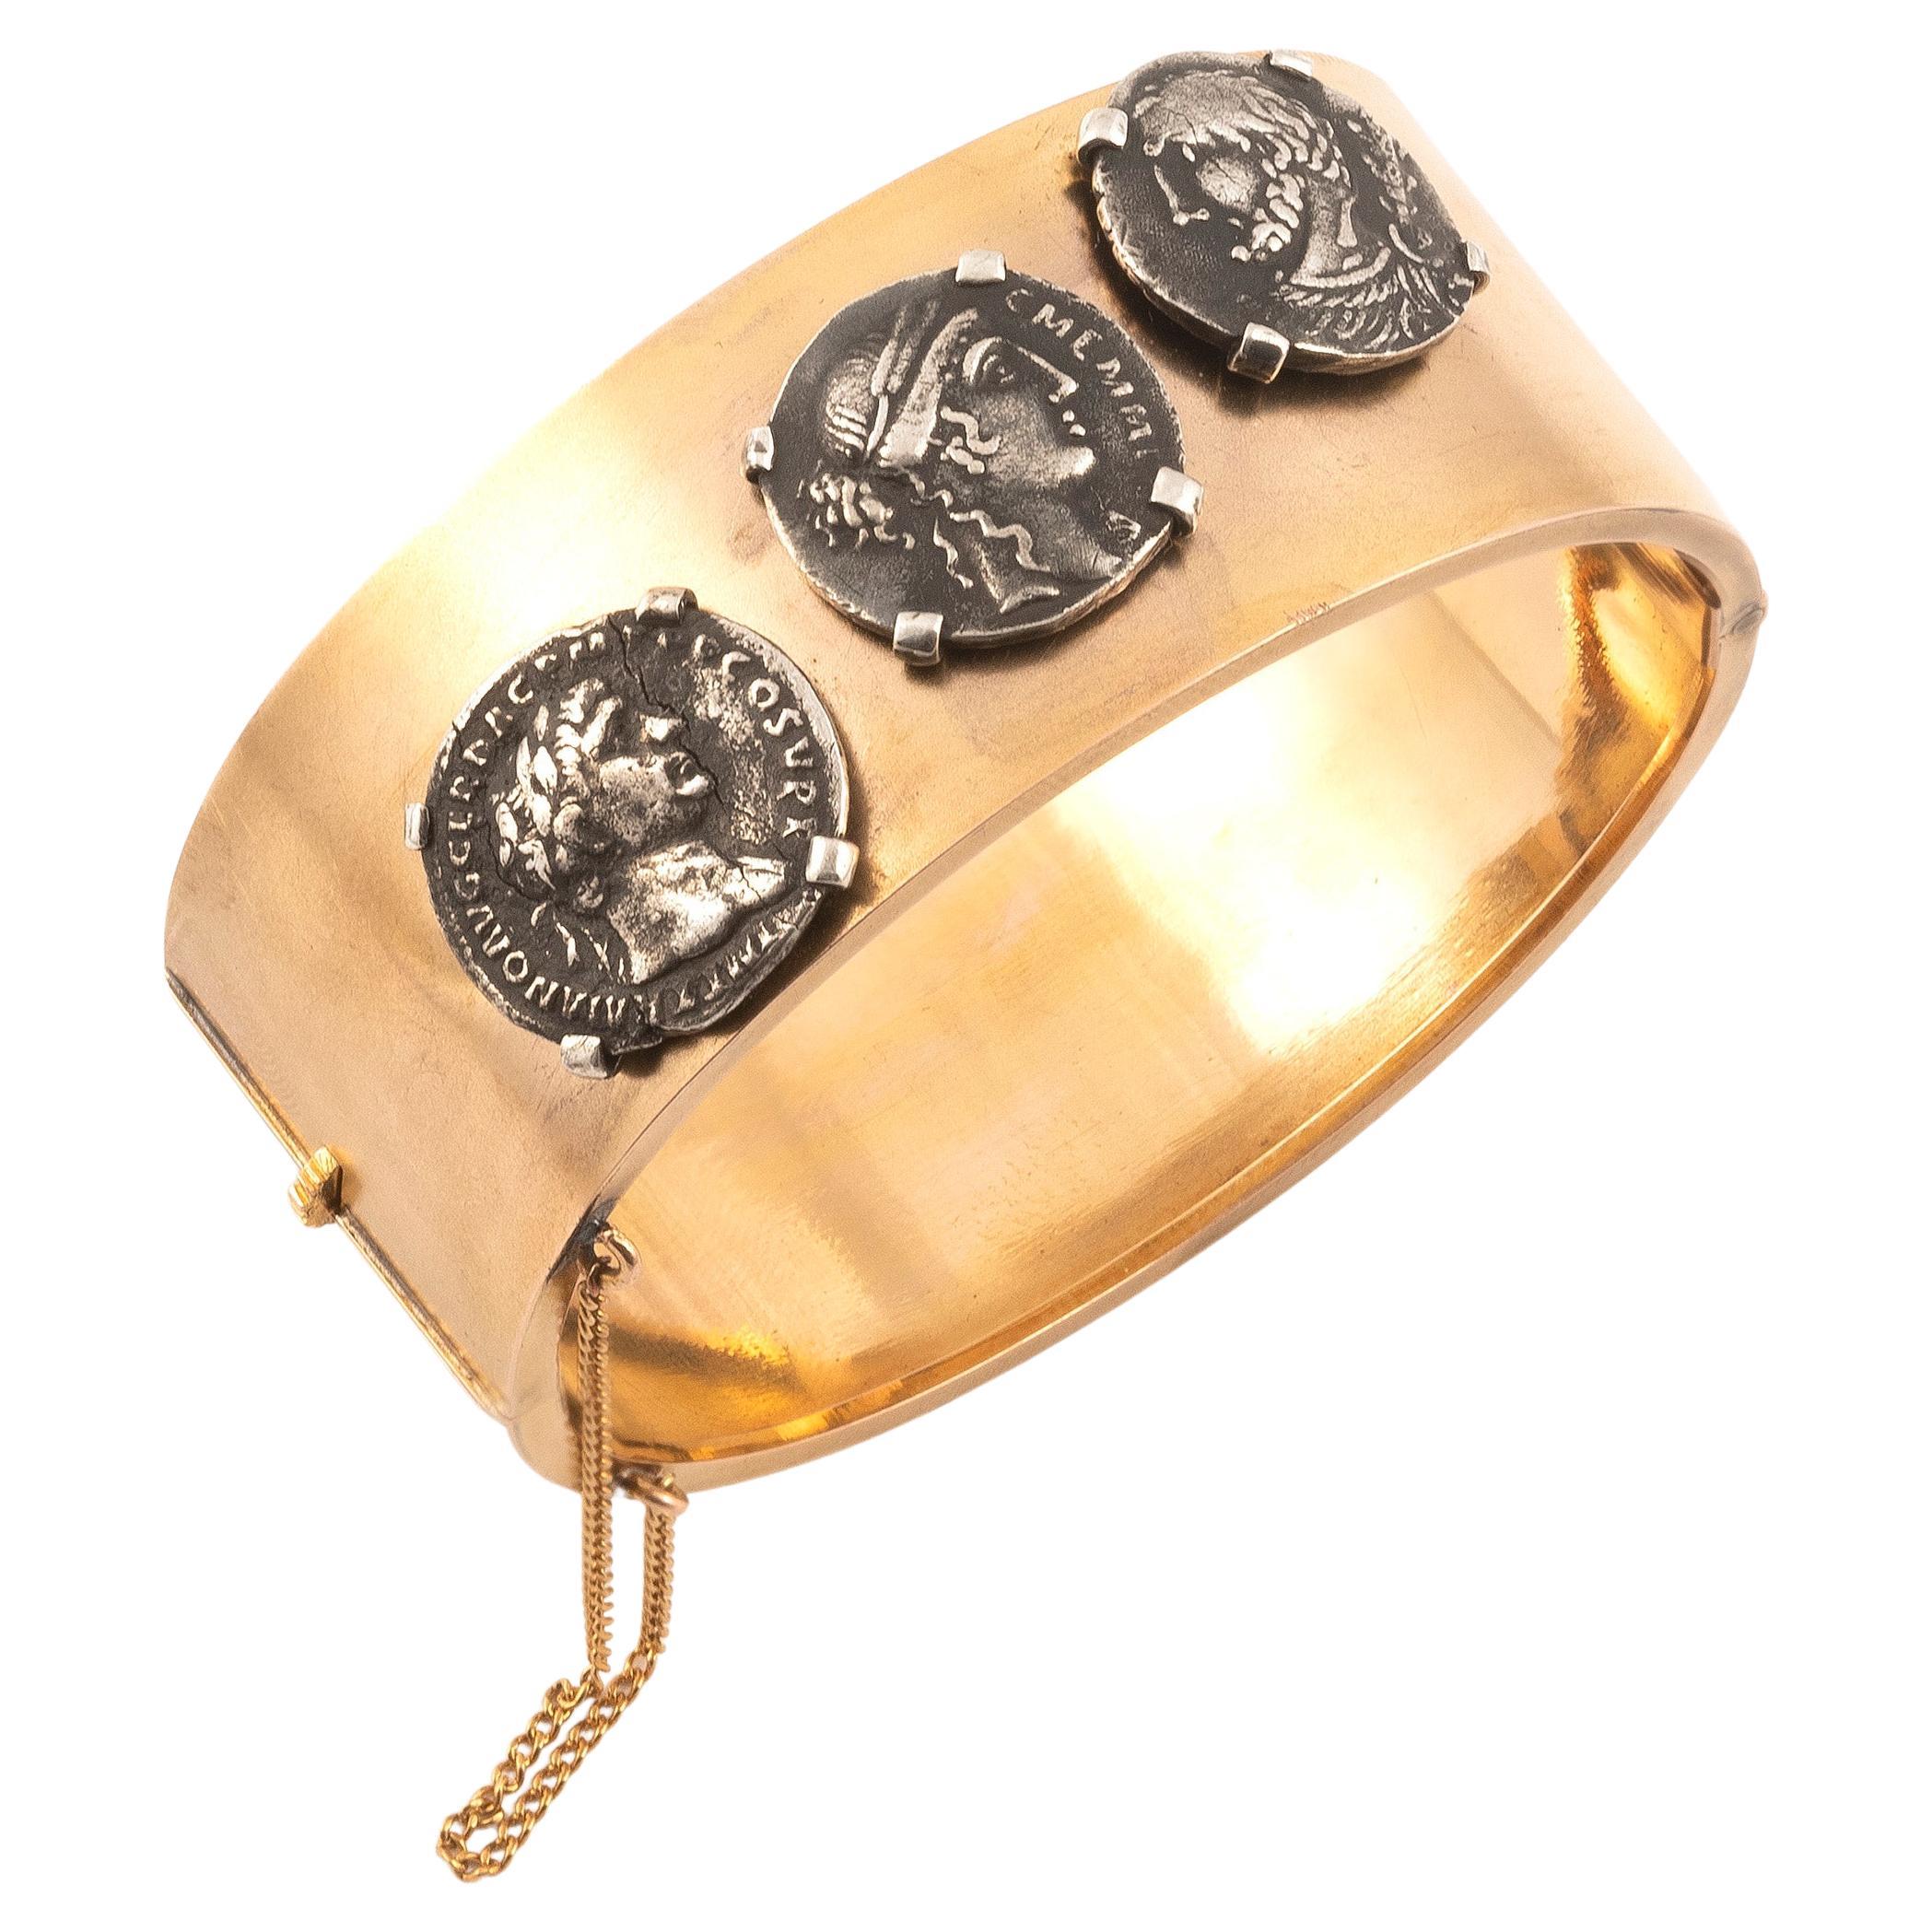 18k gold  silver roman coin motif bangle bracelet,
gross weight approximately: 31,36g.; diameter: 2 3/8in. 
Denarius  Roman Republican  Quinctius 112 A.C.
Denarius republican C. Memmia 56 A.C.
ROME-Denarius-Traianus-98-117 A.C.